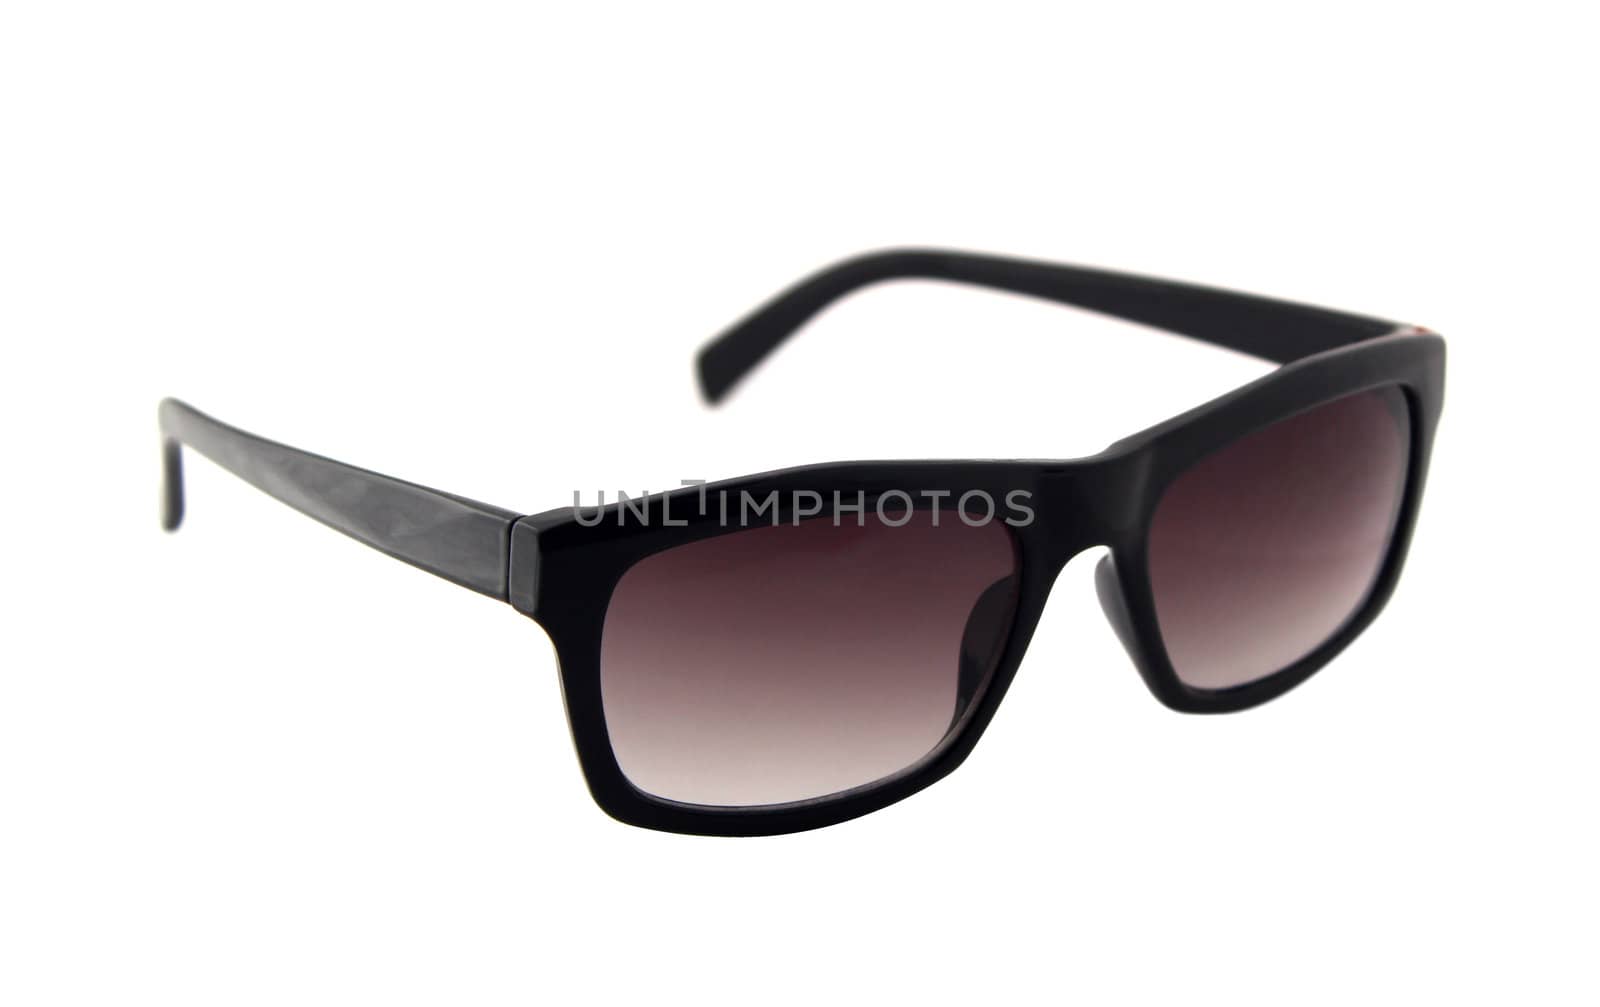 Pair of black sunglasses on white background